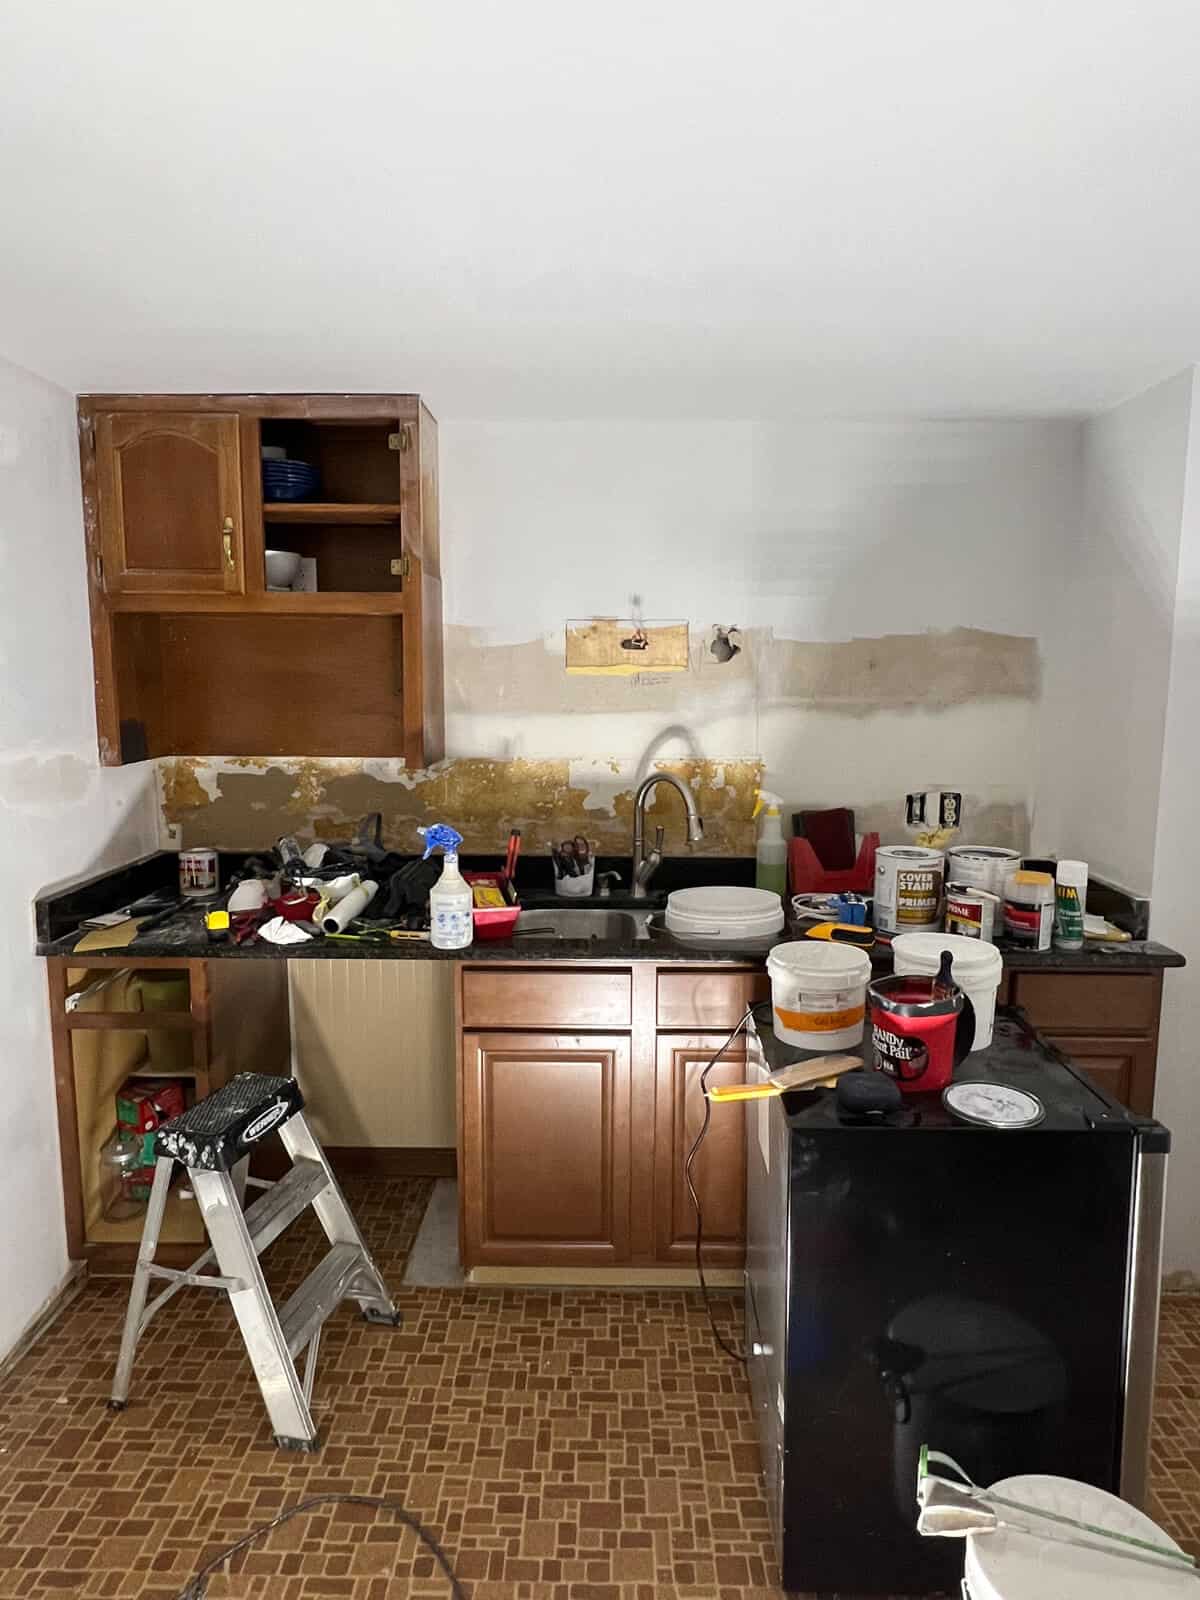  basement kitchenette remodel in progress